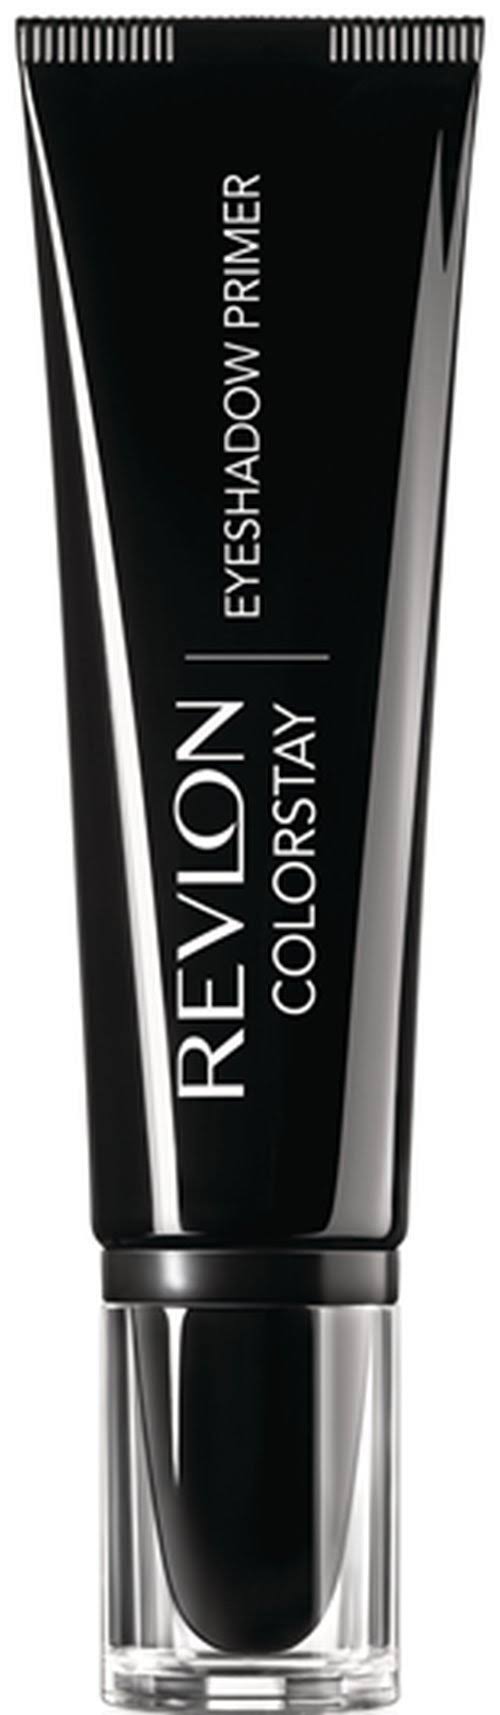 Revlon Colorstay Eye Shadow Primer